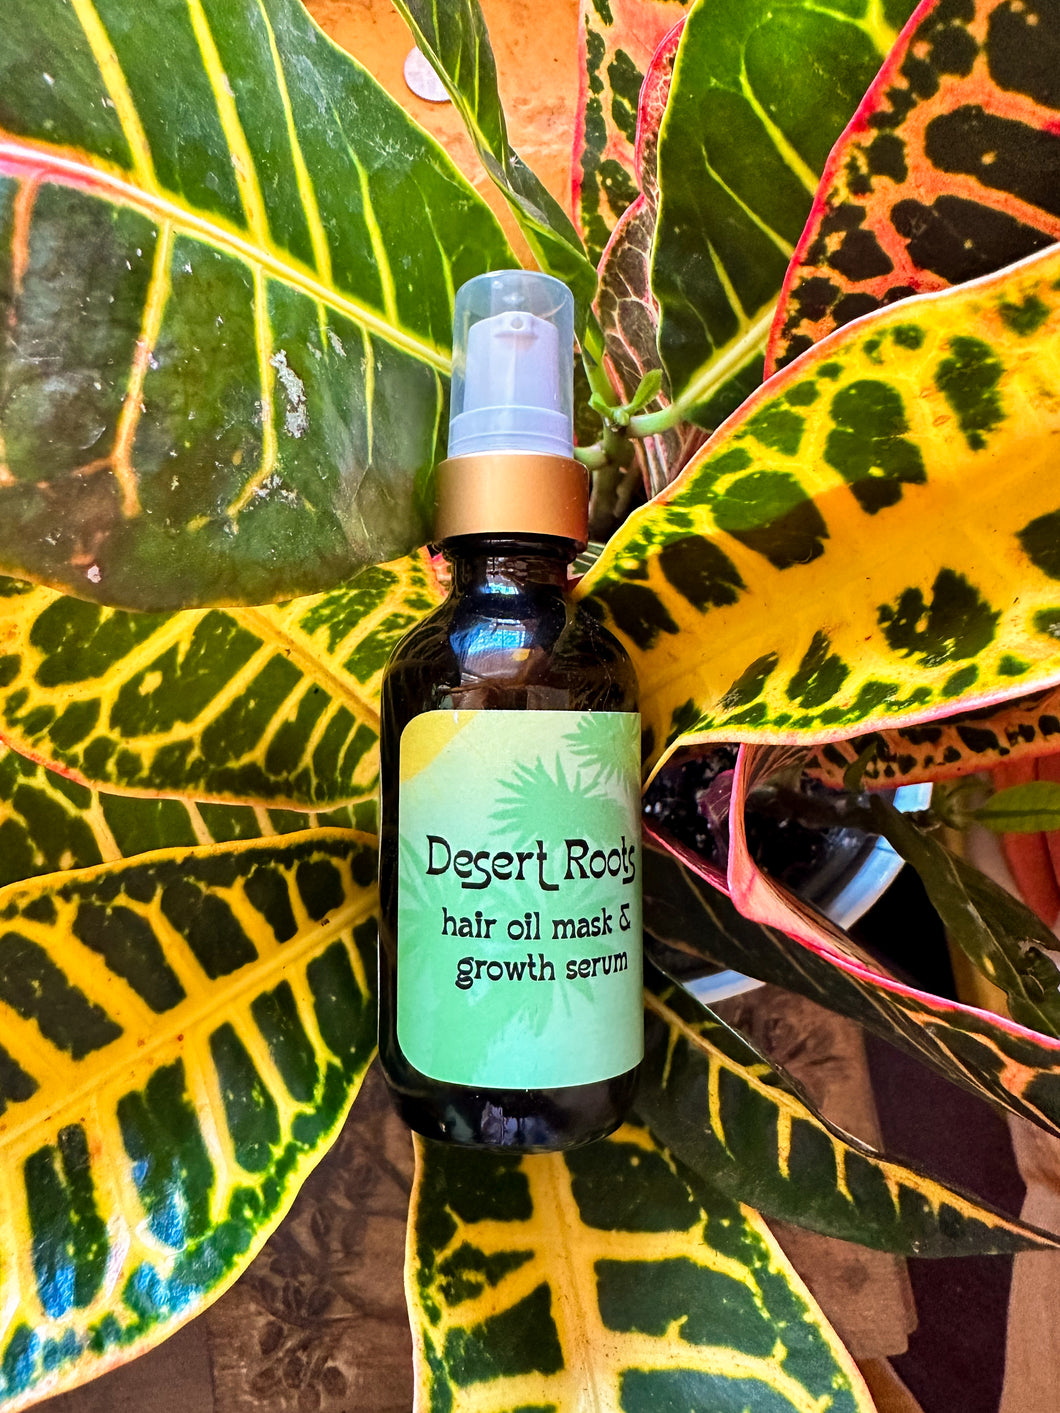 Desert Roots - hair oil mask & growth serum